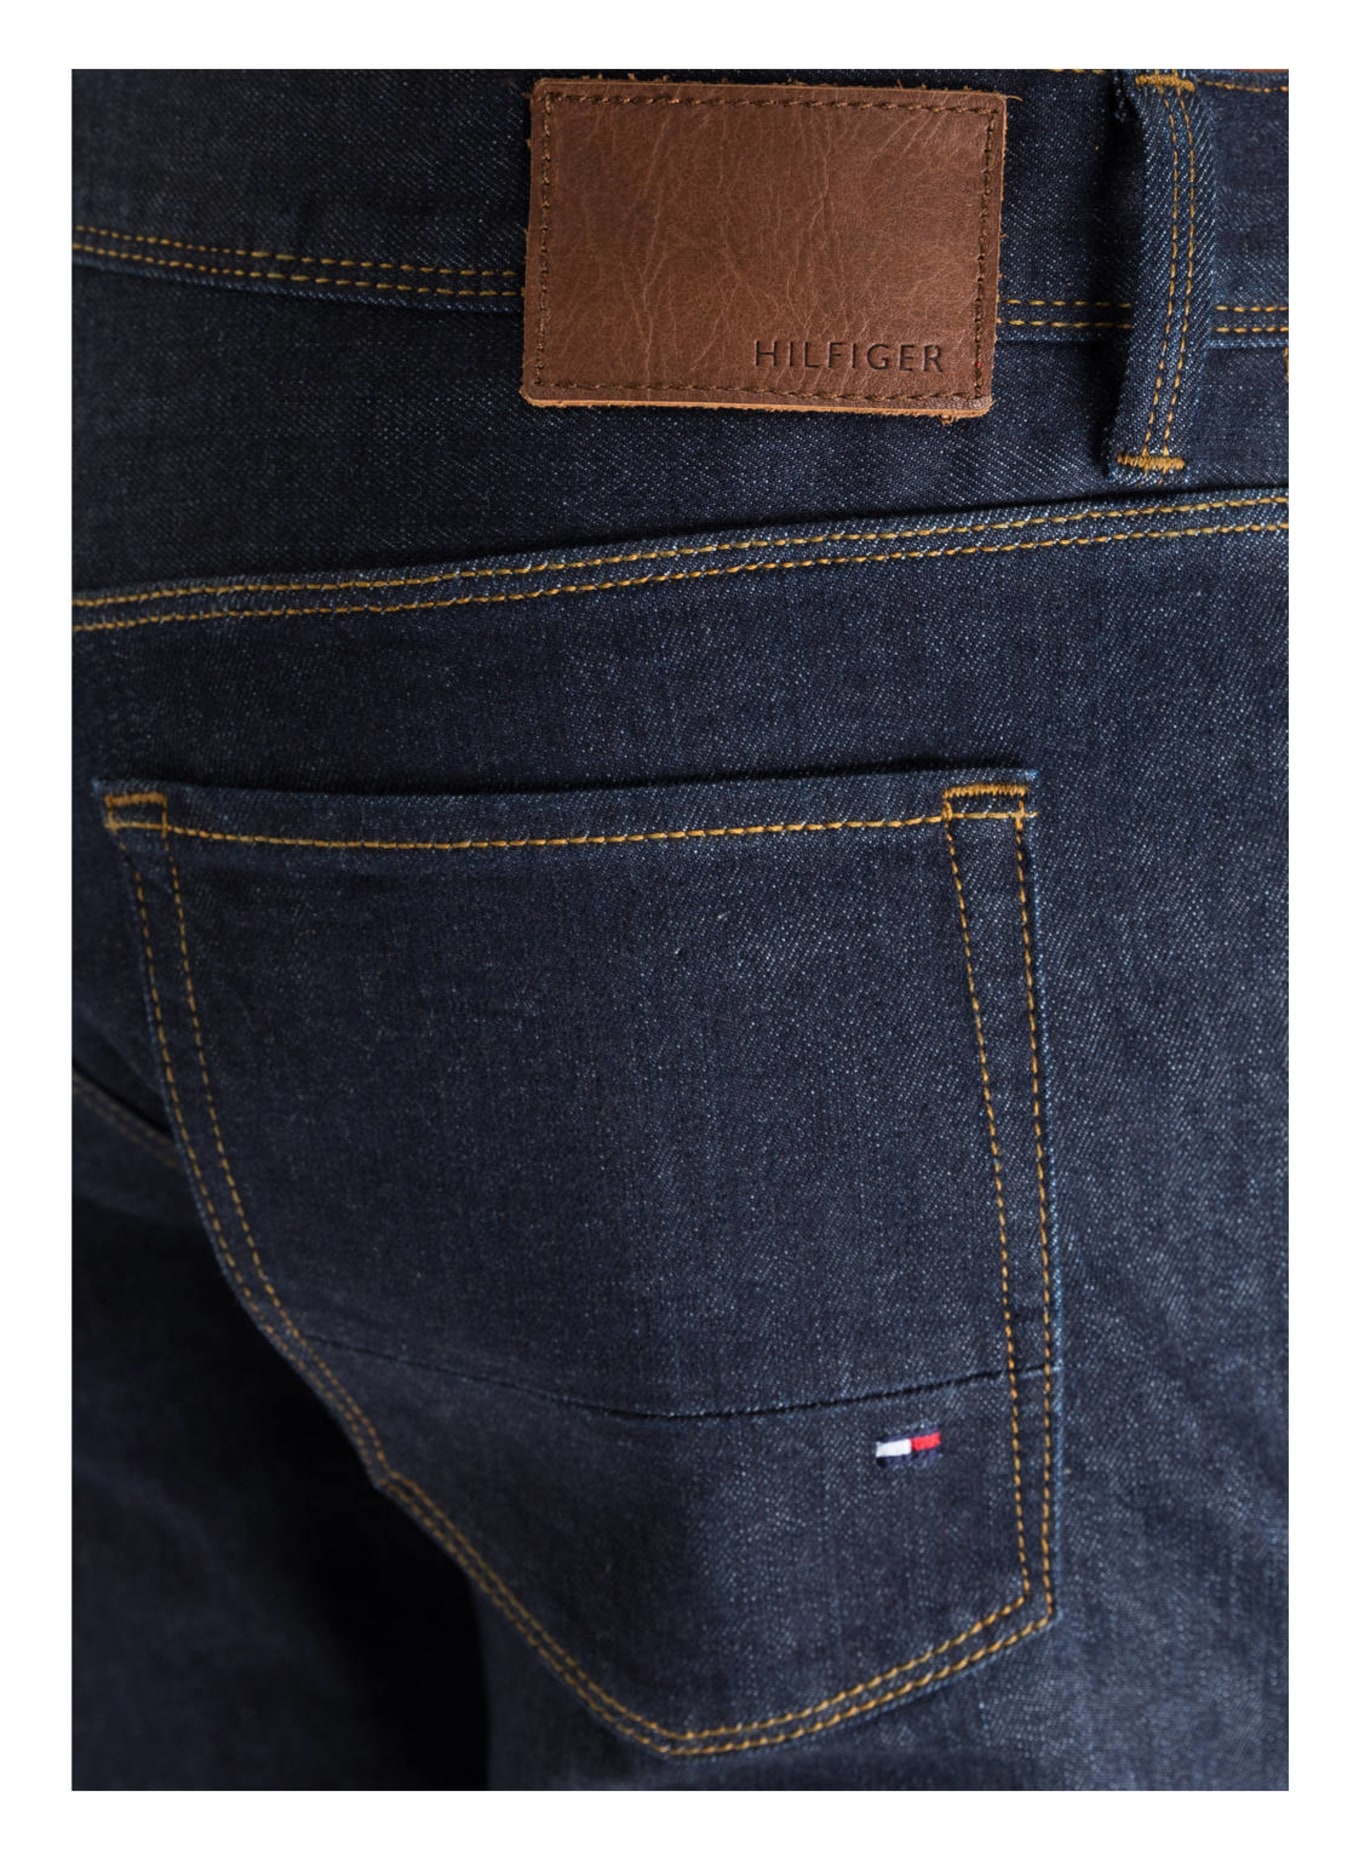 TOMMY HILFIGER Jeans DENTON Straight Fit, Farbe: 919 rinsed (Bild 5)